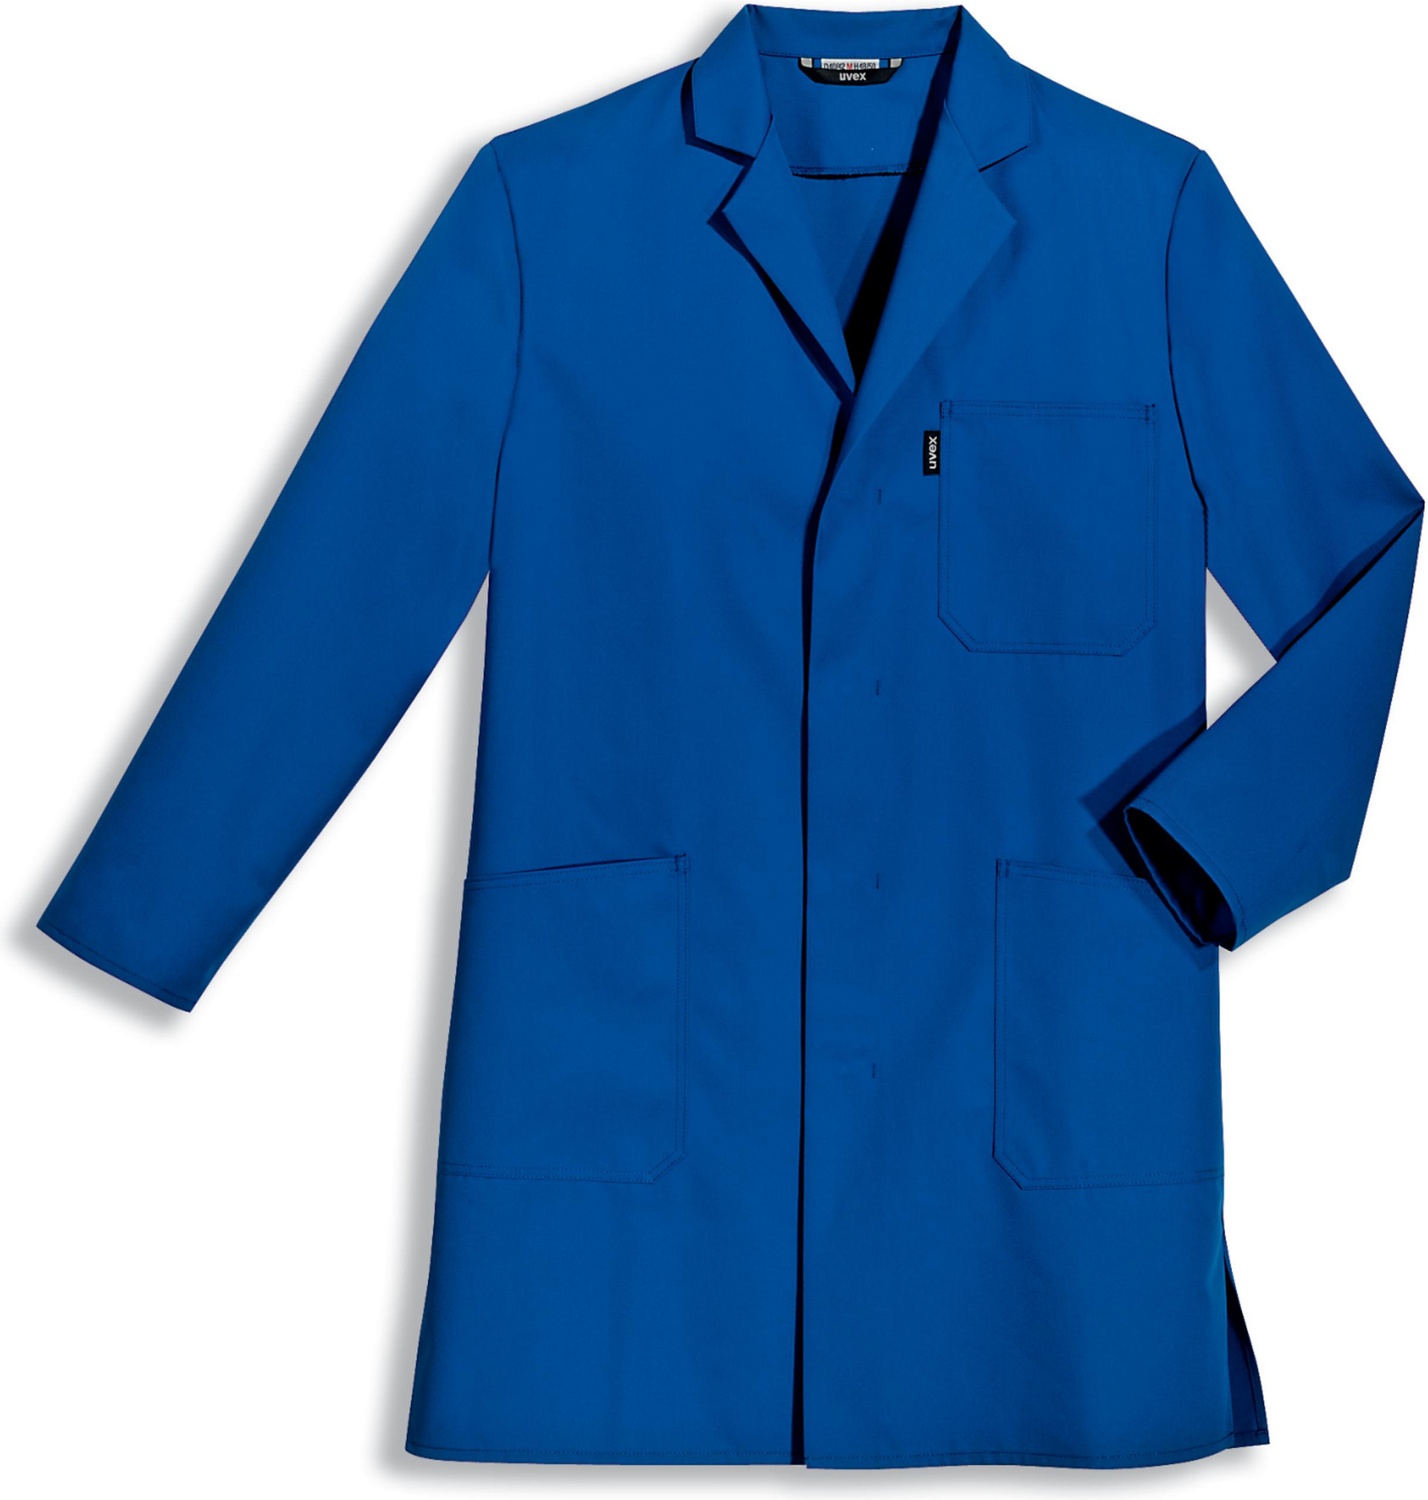 Куртка Uvex Jacke, синий